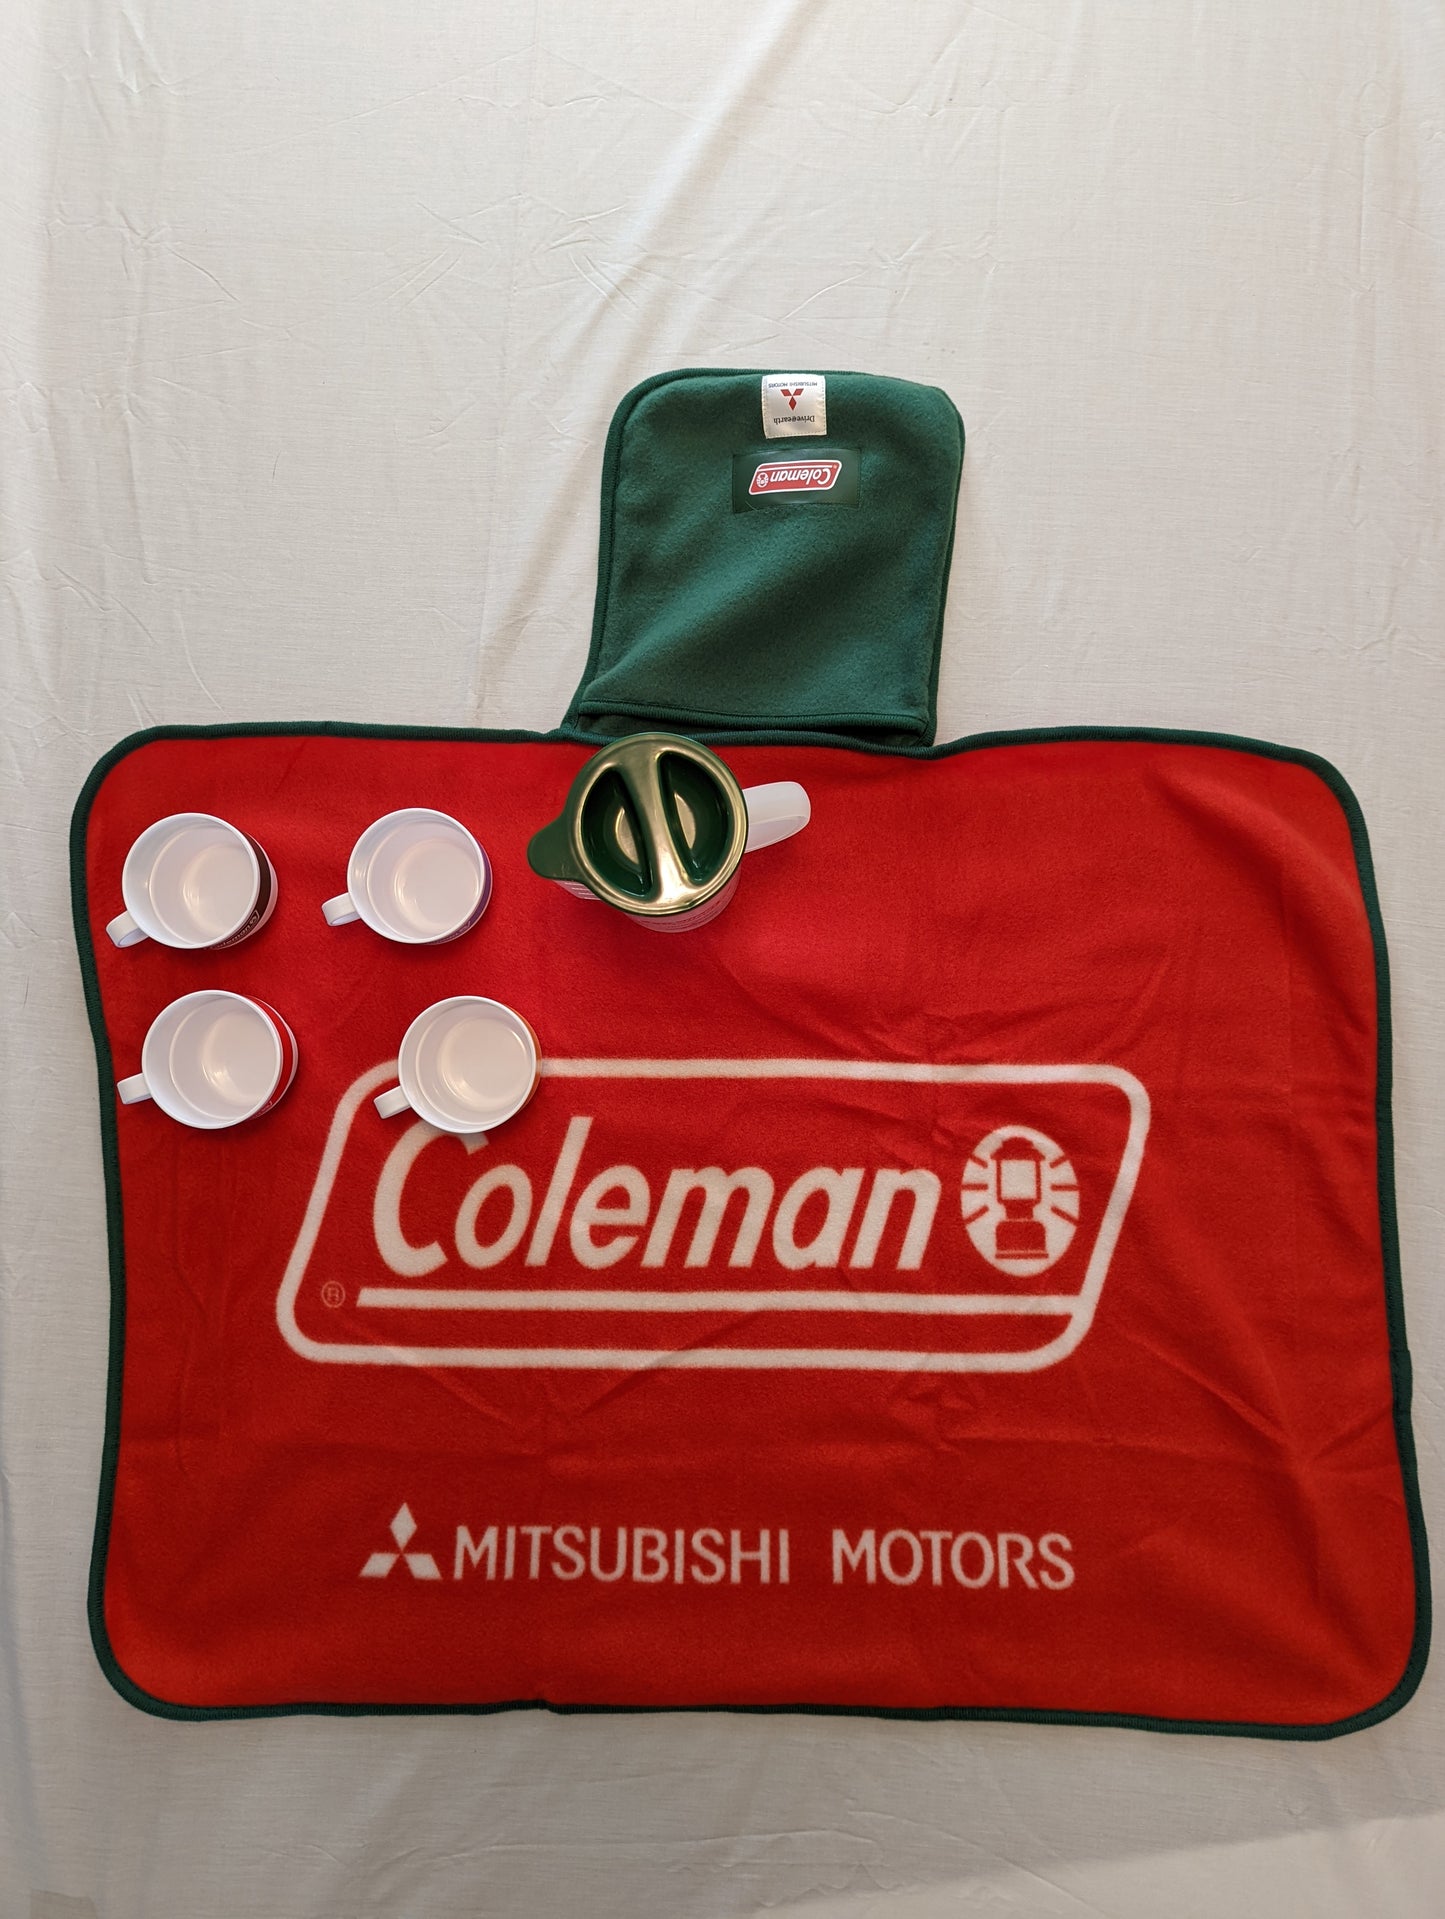 Mitsubishi x Coleman Picnic Set